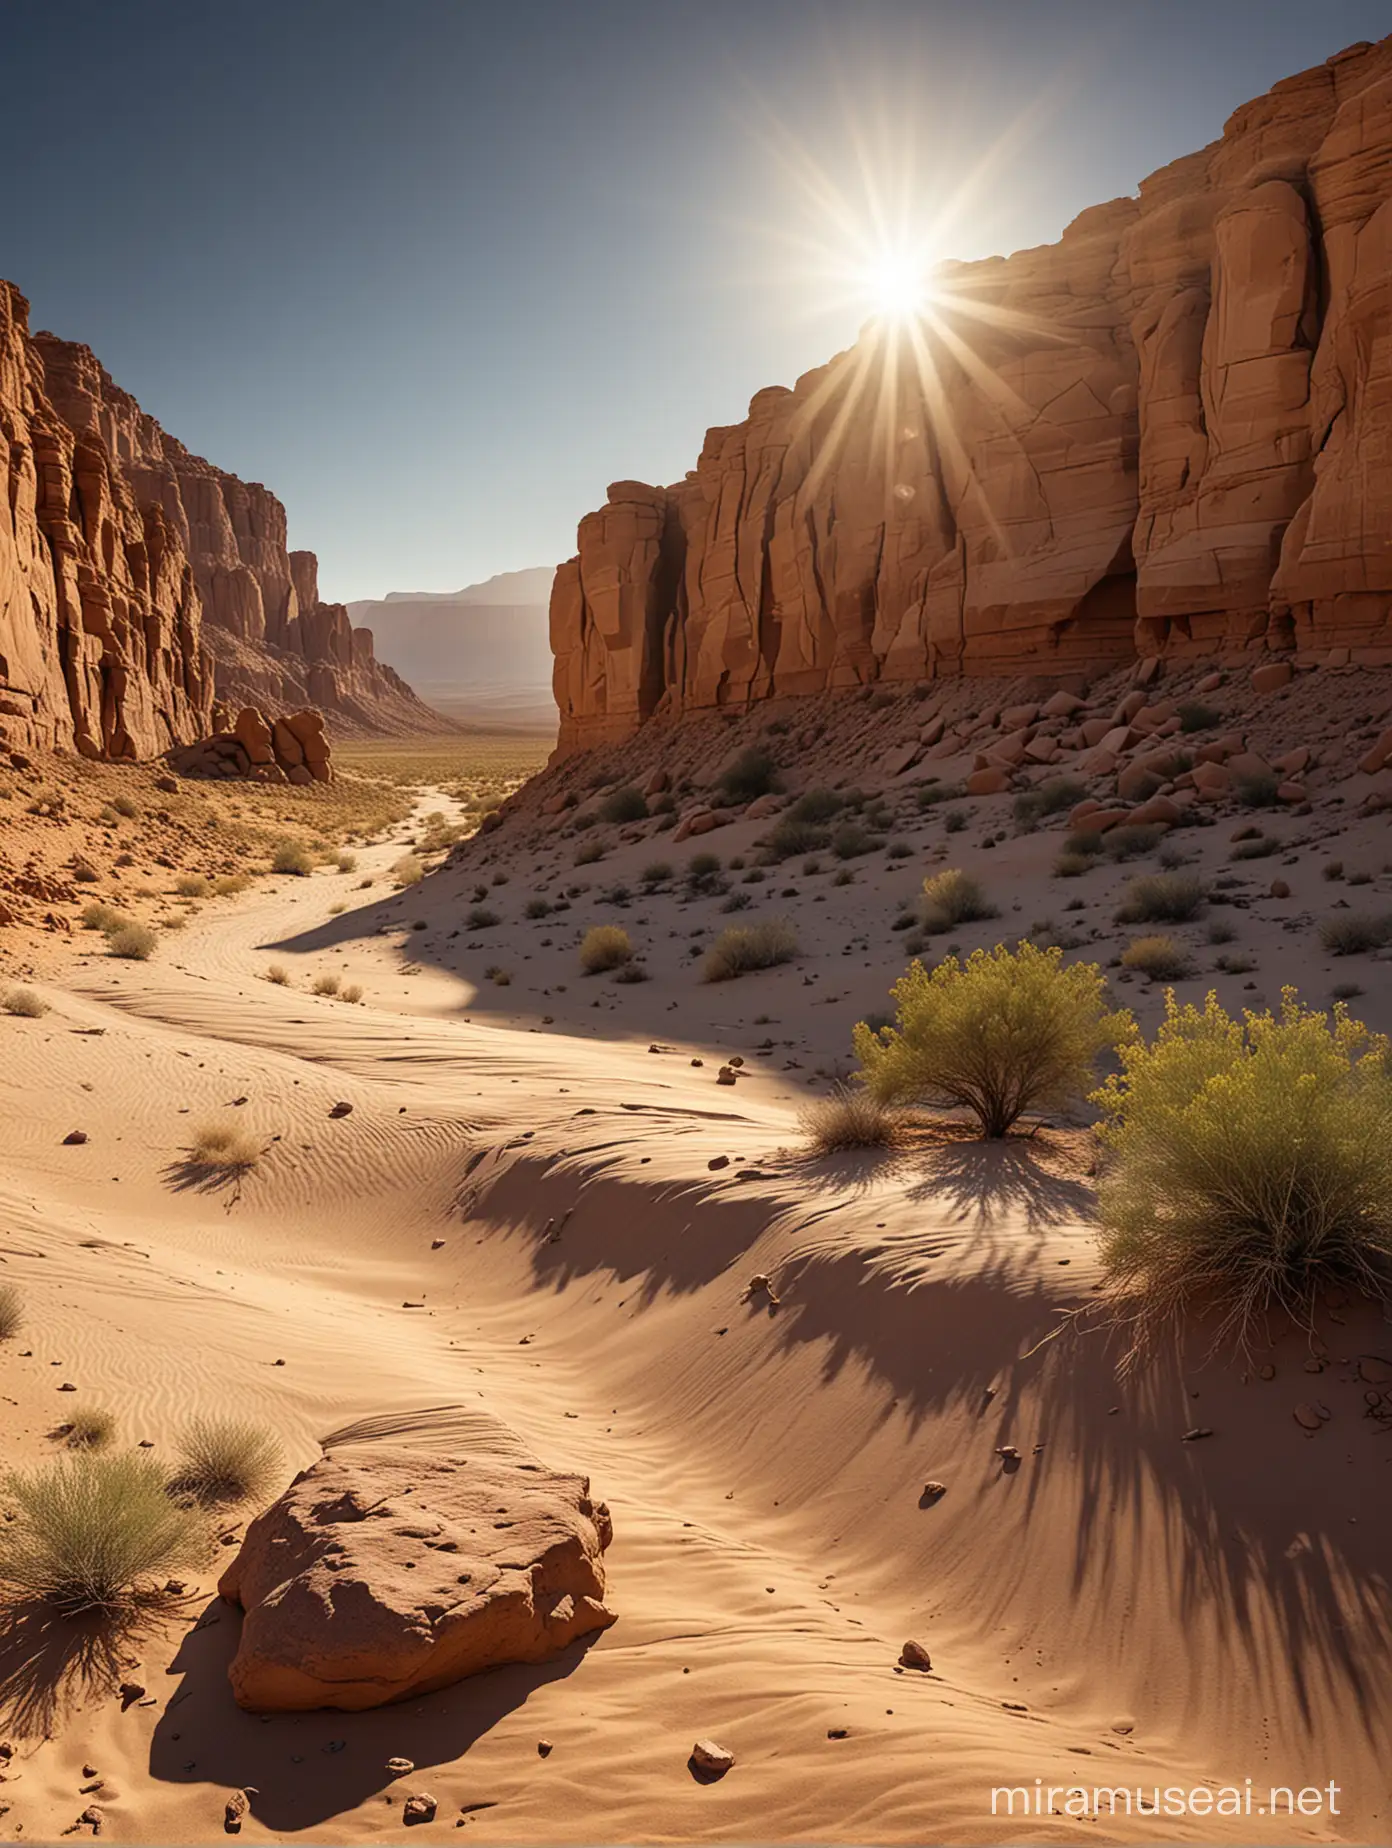 Majestic Desert Landscape with Architectural Marvels